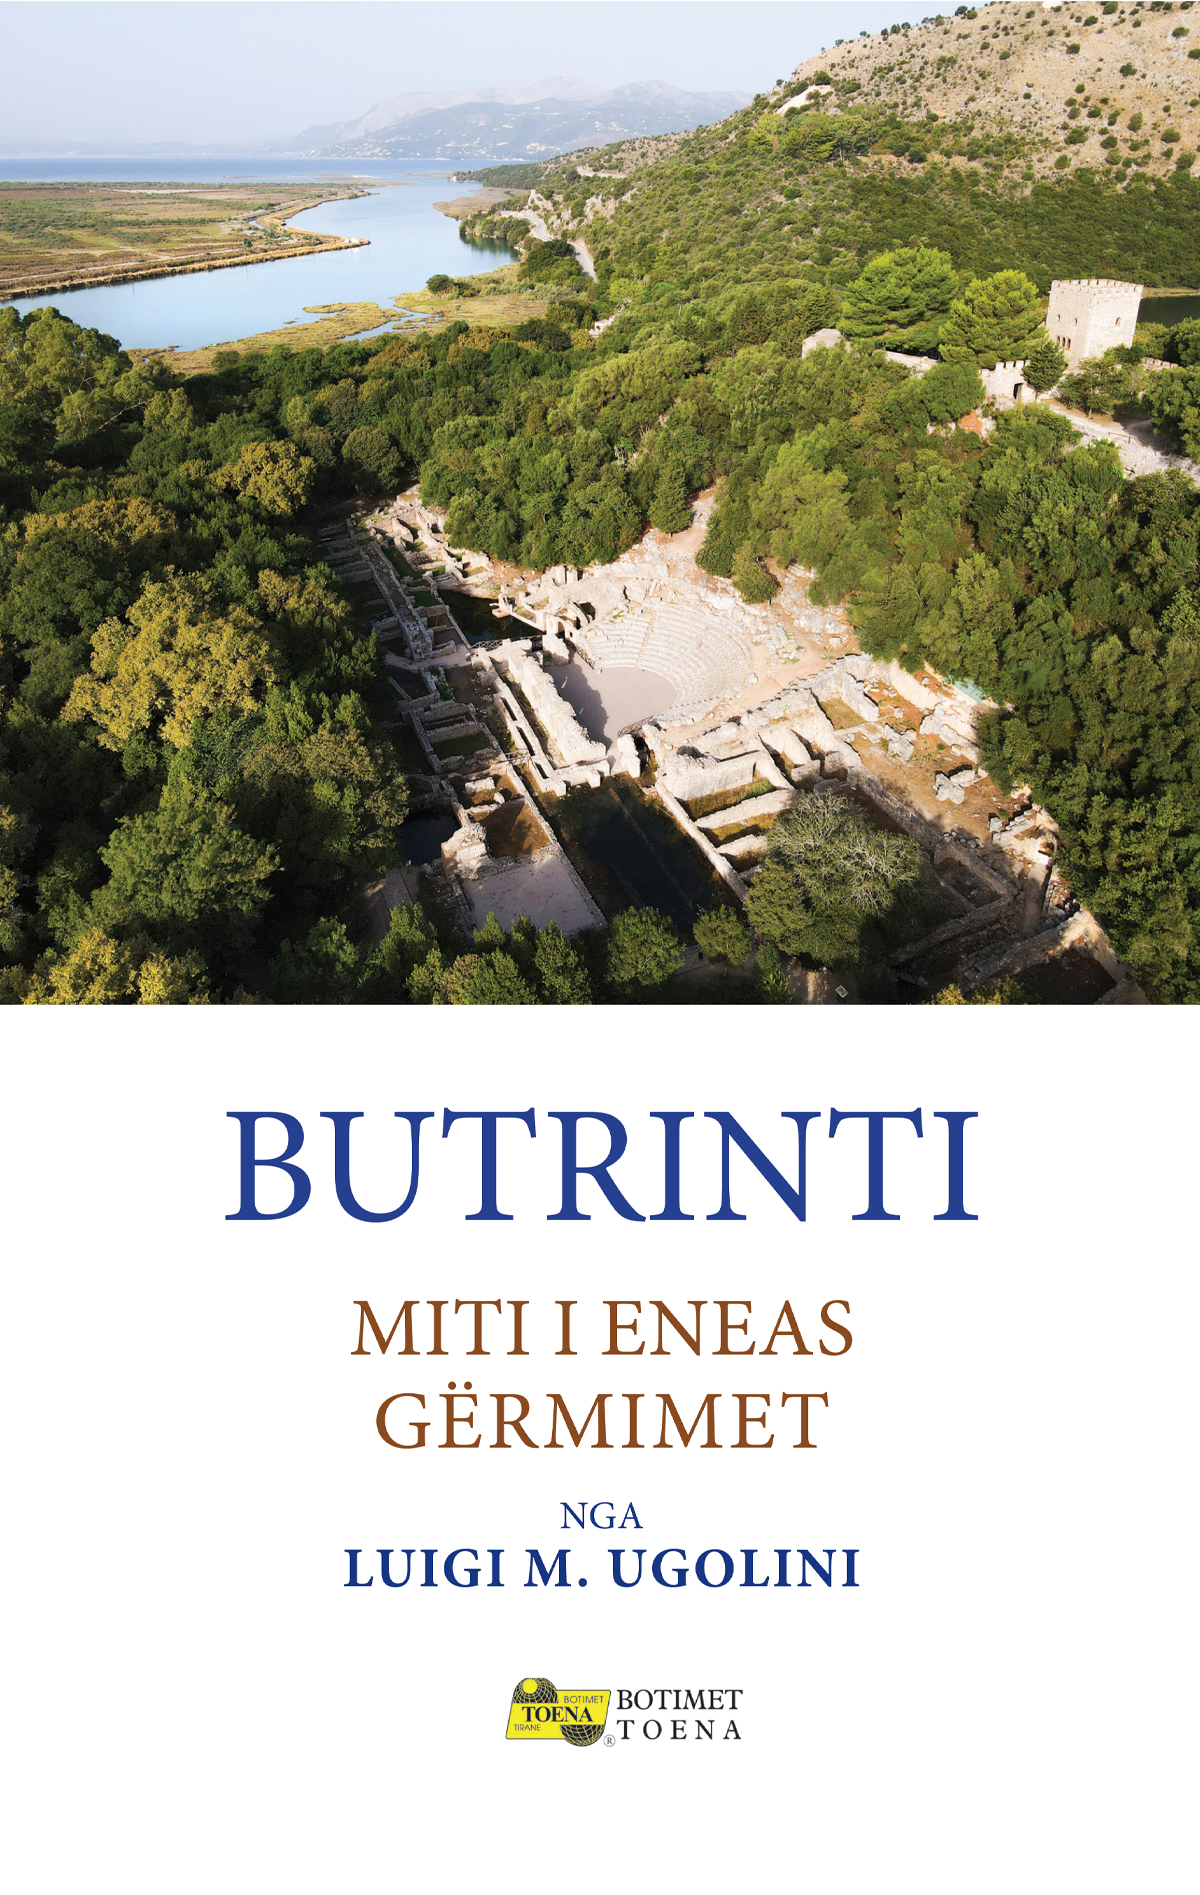 Butrinti - Miti i Eneas